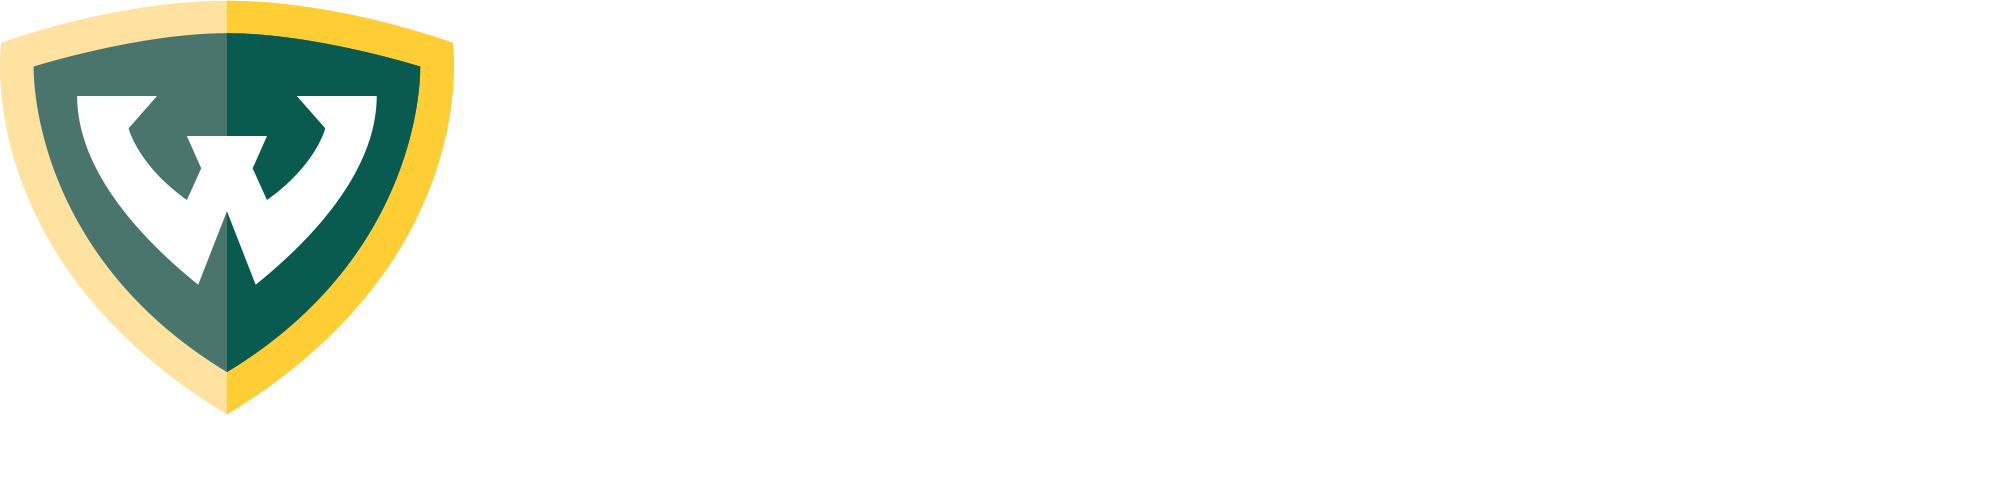 Highlighting Wayne State University's Community Engagement